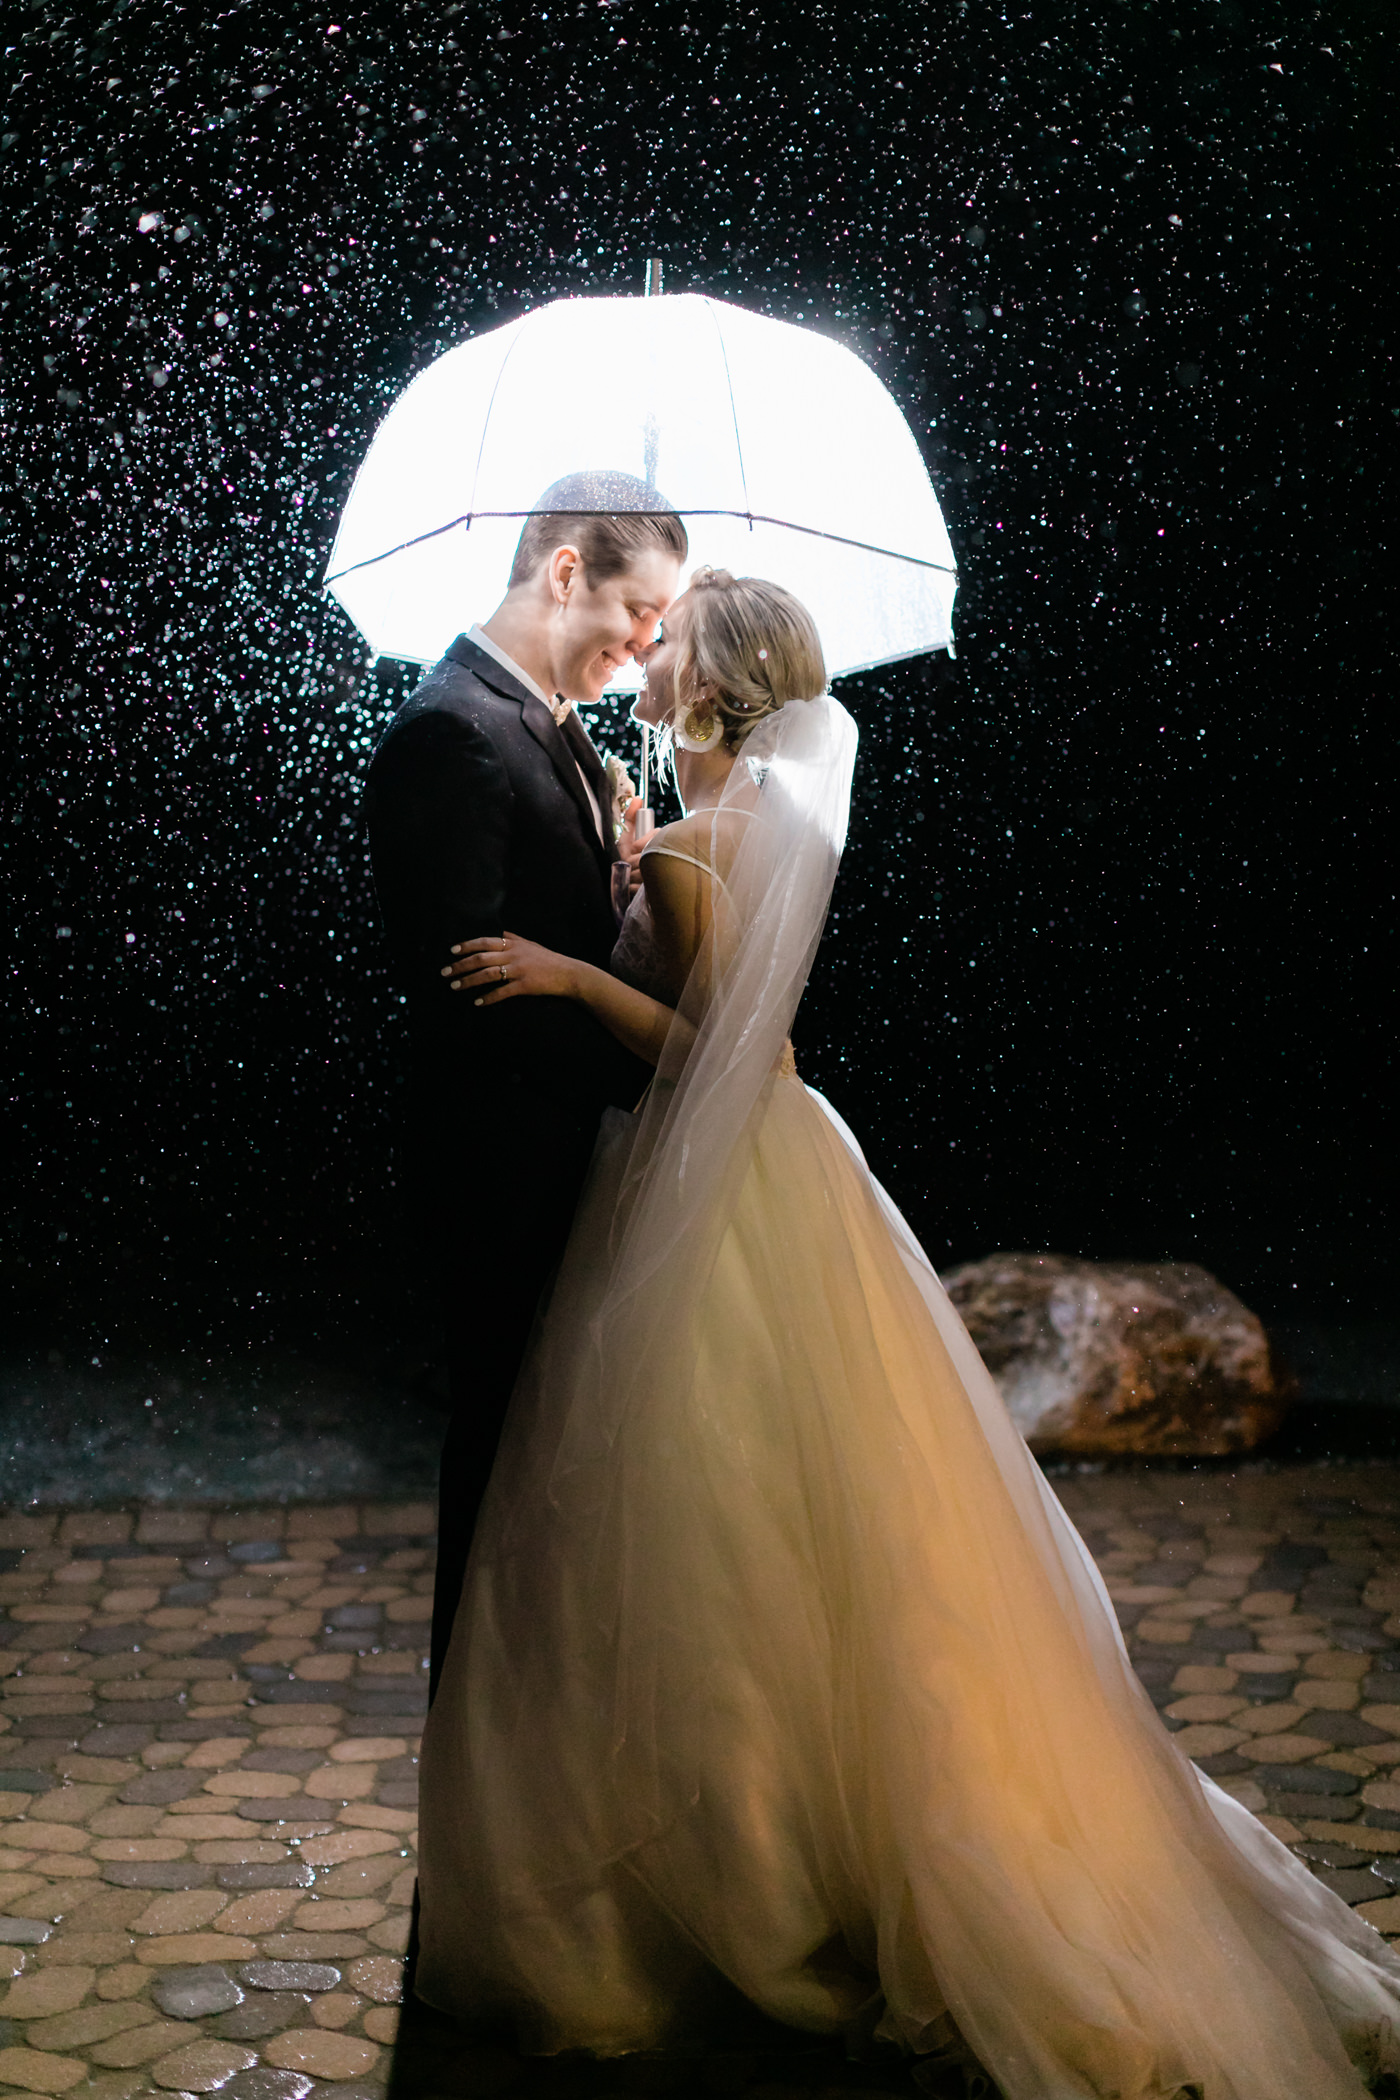 Rainy Oyster Ridge Wedding photo at night by Tayler Enerle